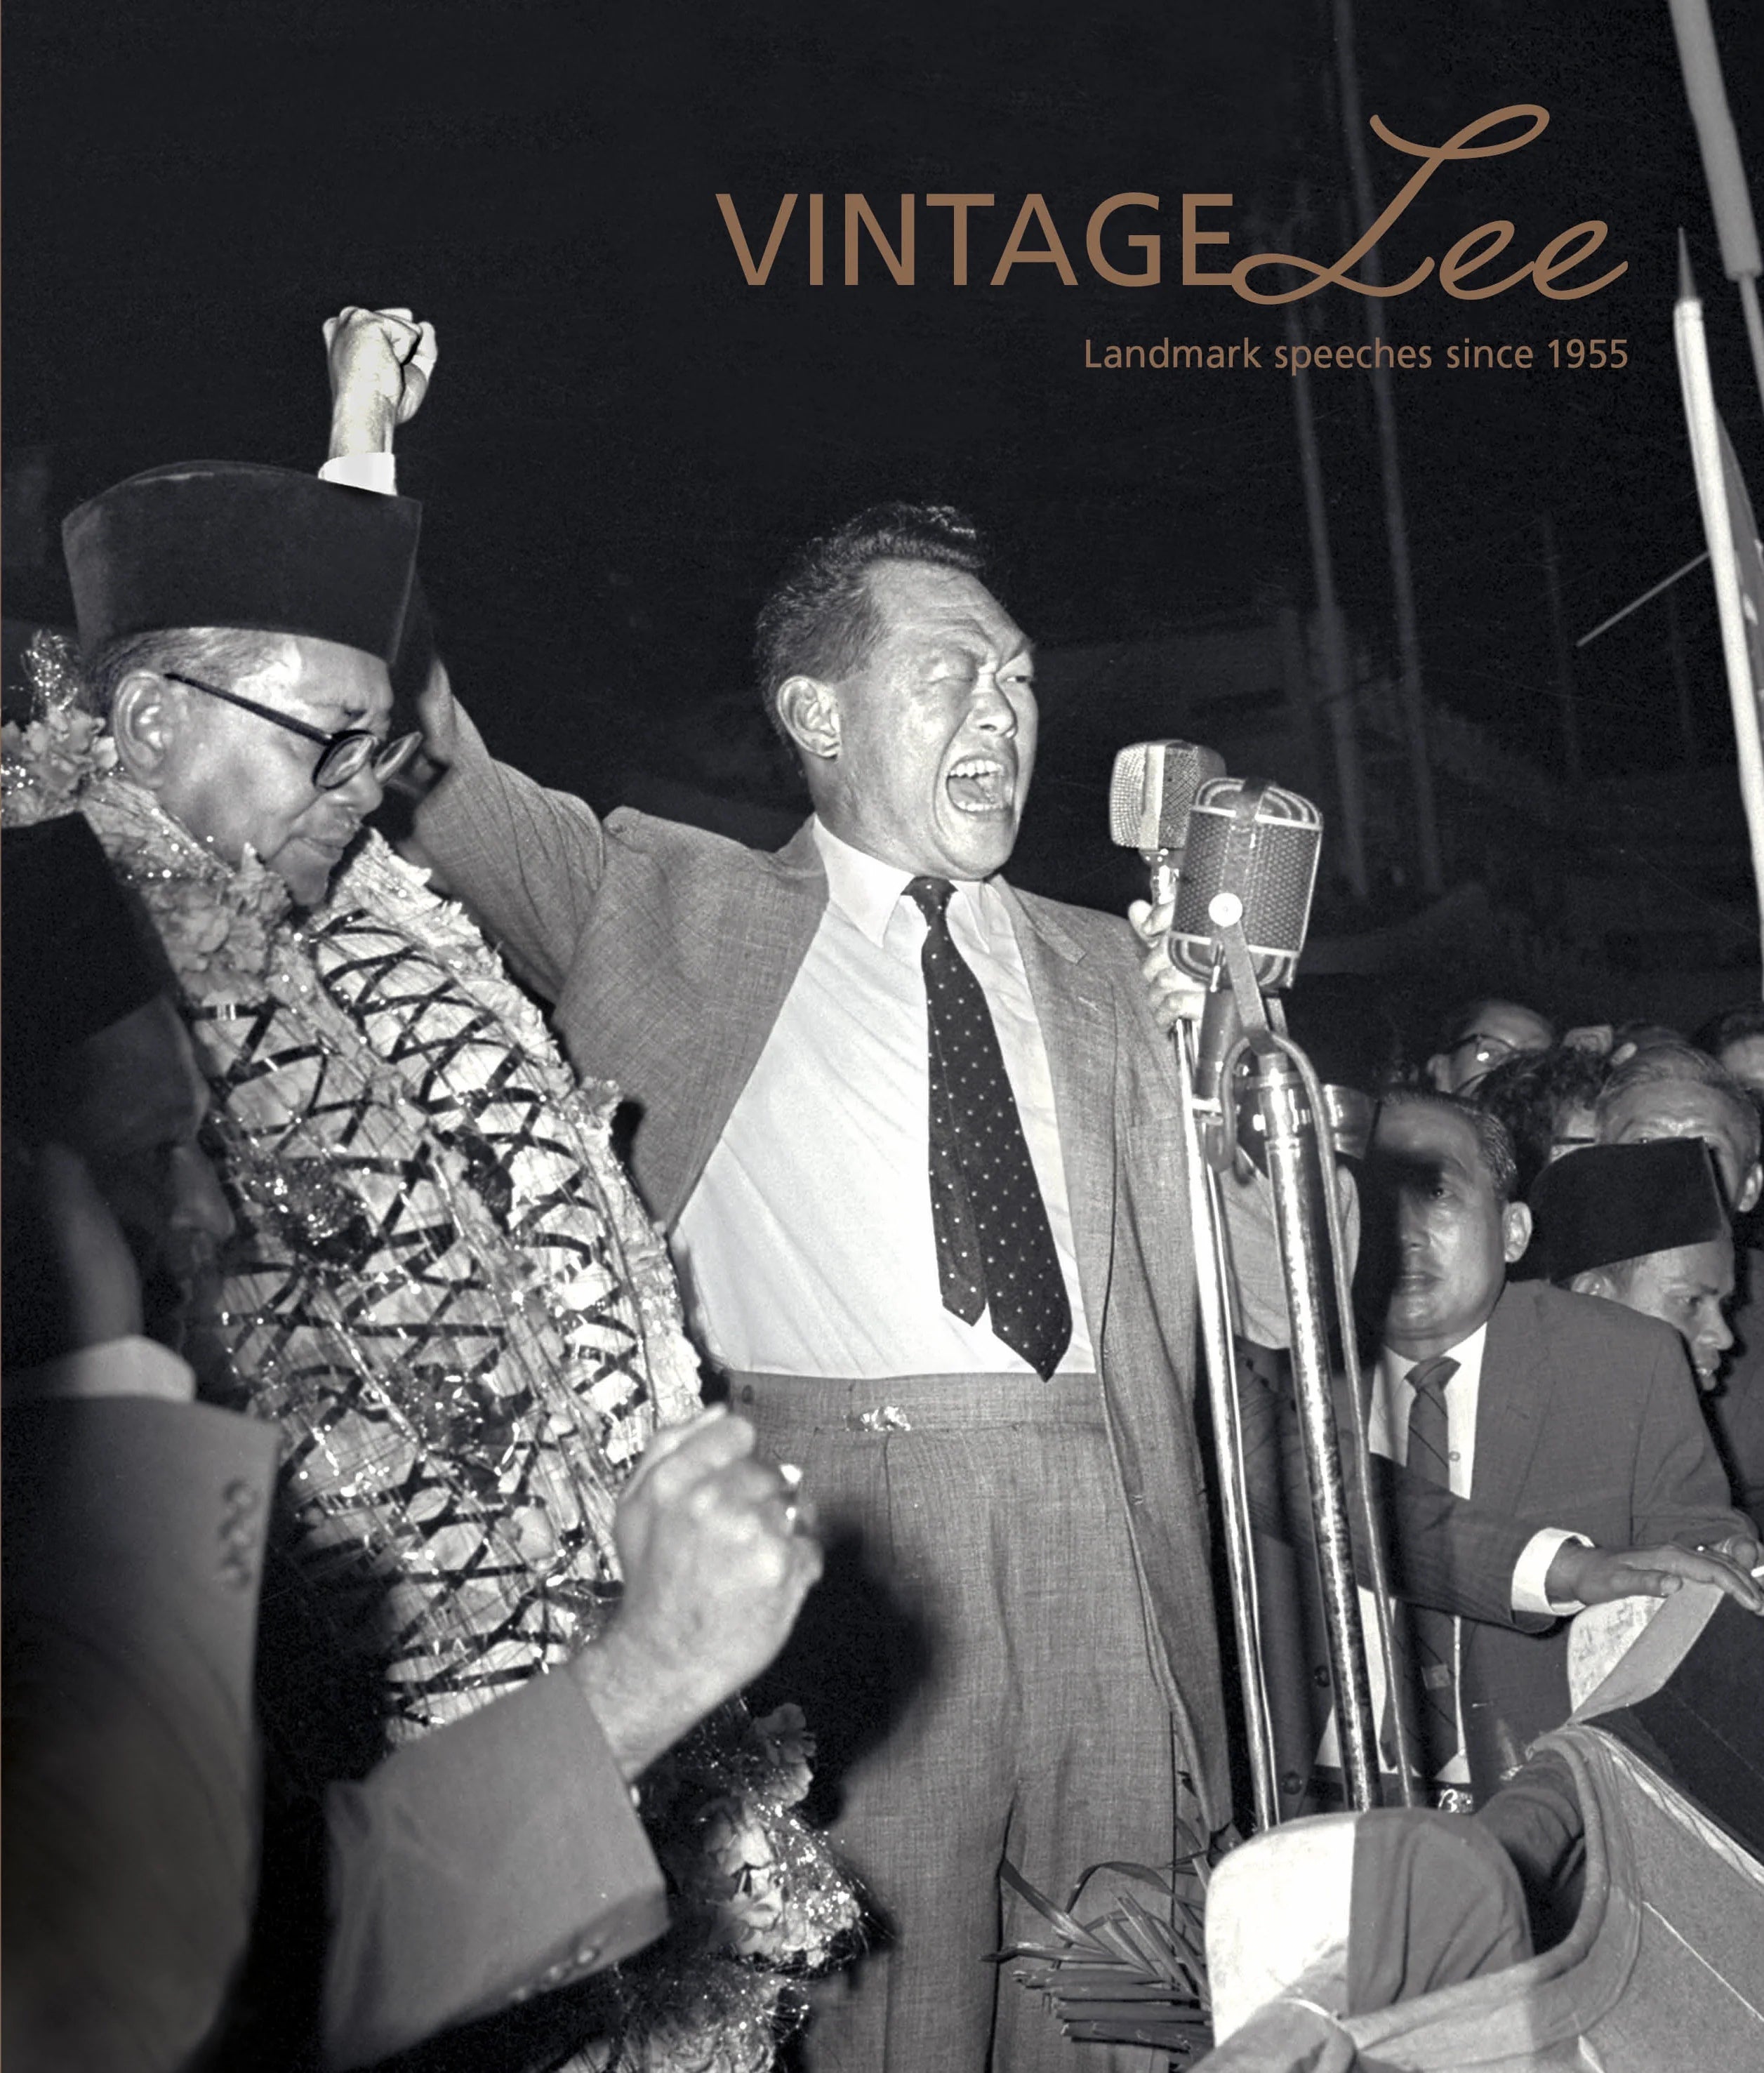 Vintage Lee: Landmark speeches since 1955